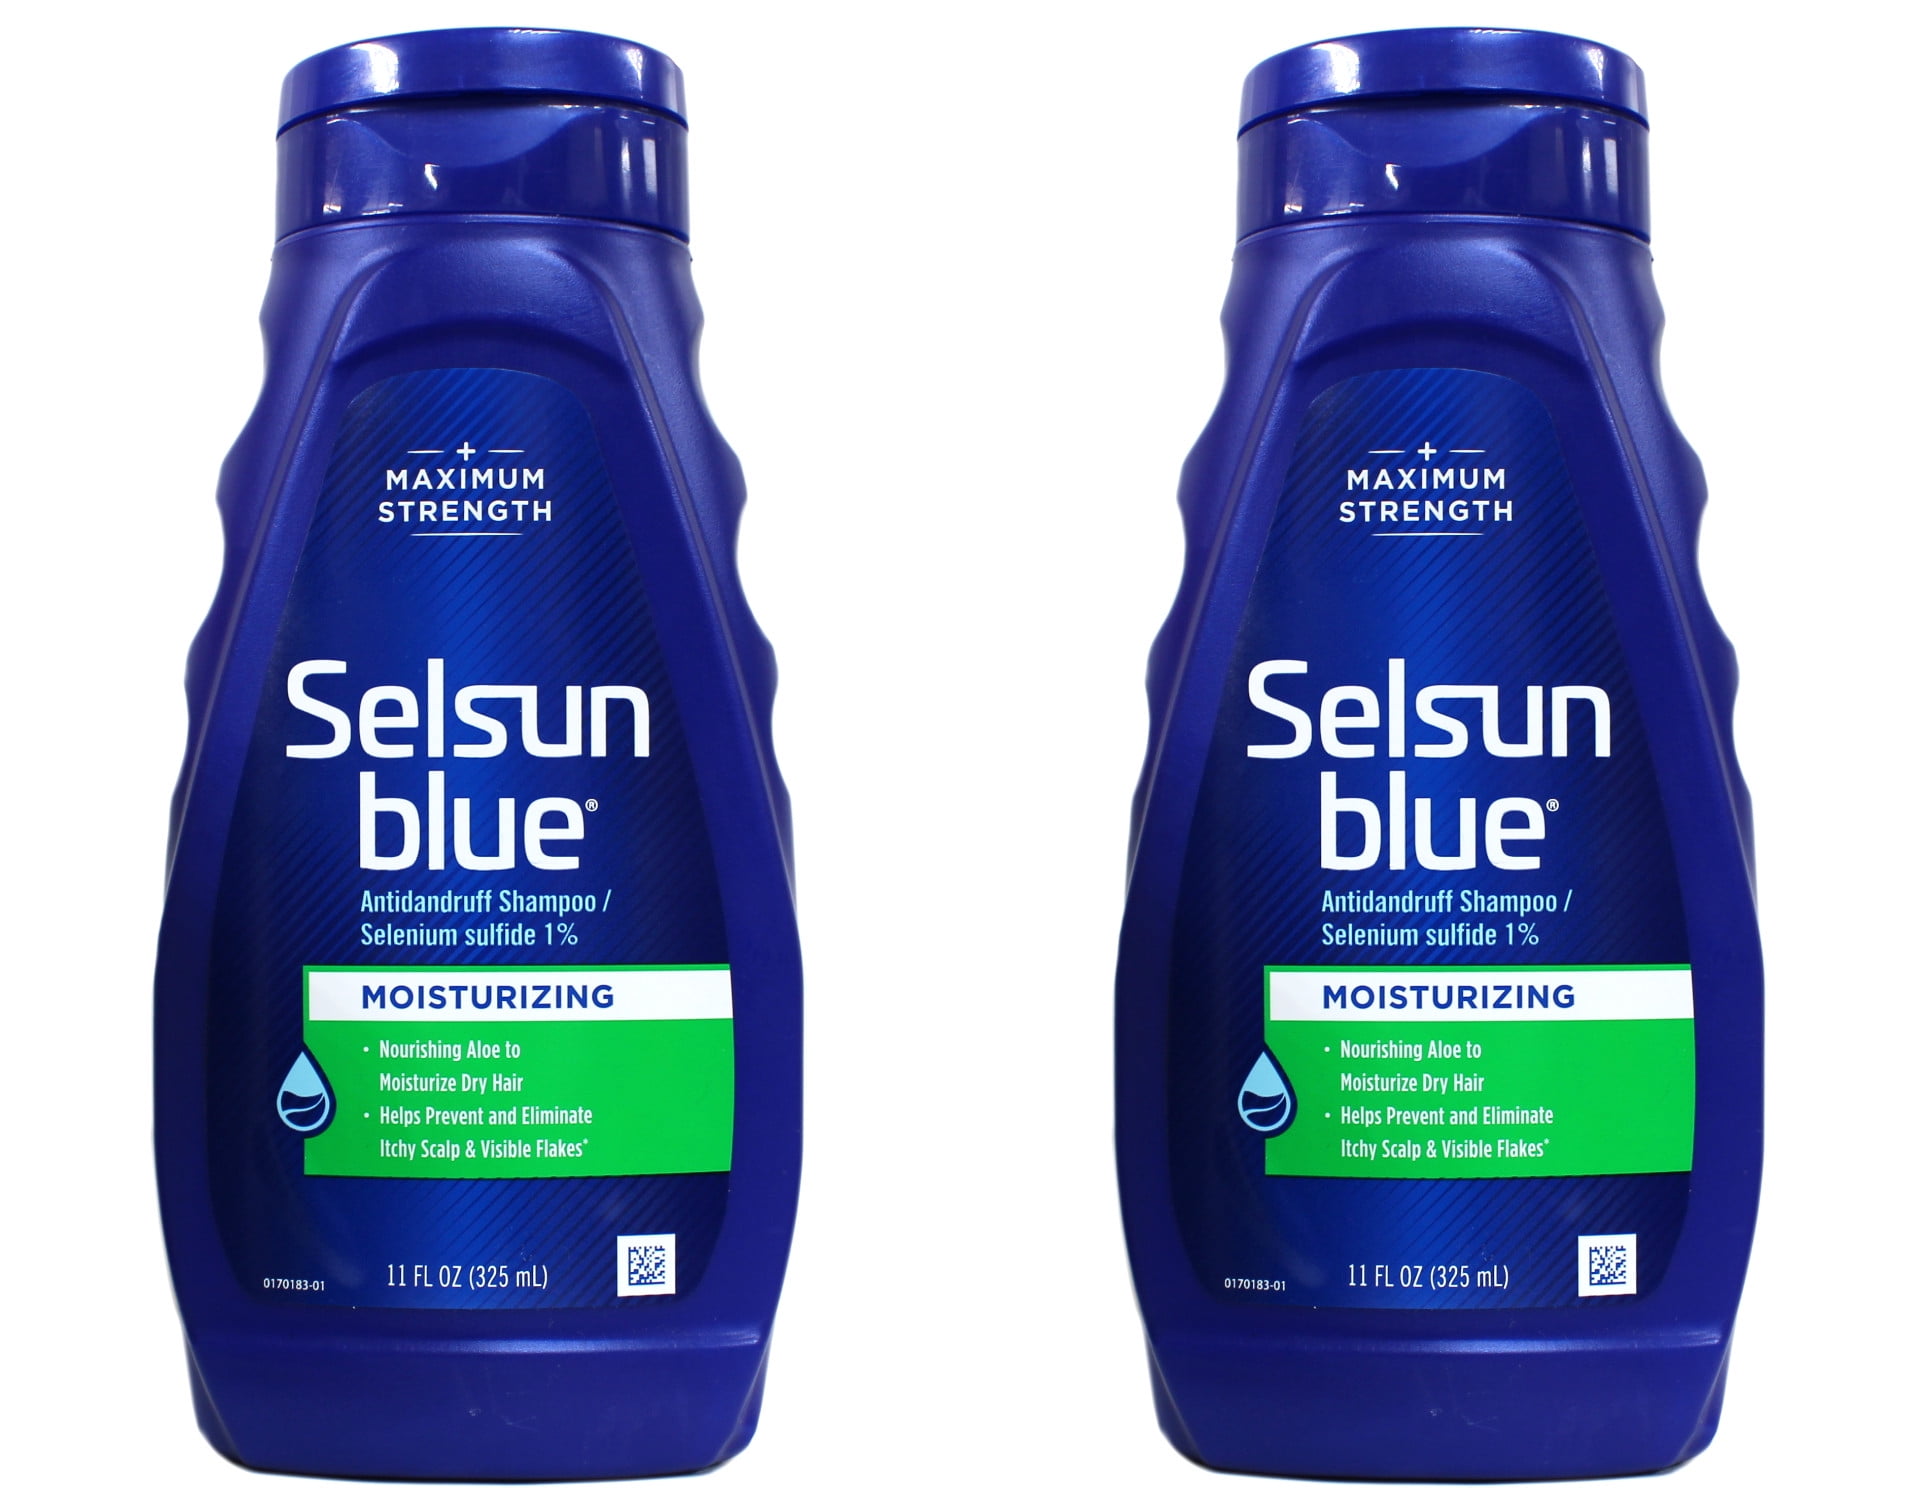 3. Selsun Blue Naturals Dandruff Shampoo - wide 2